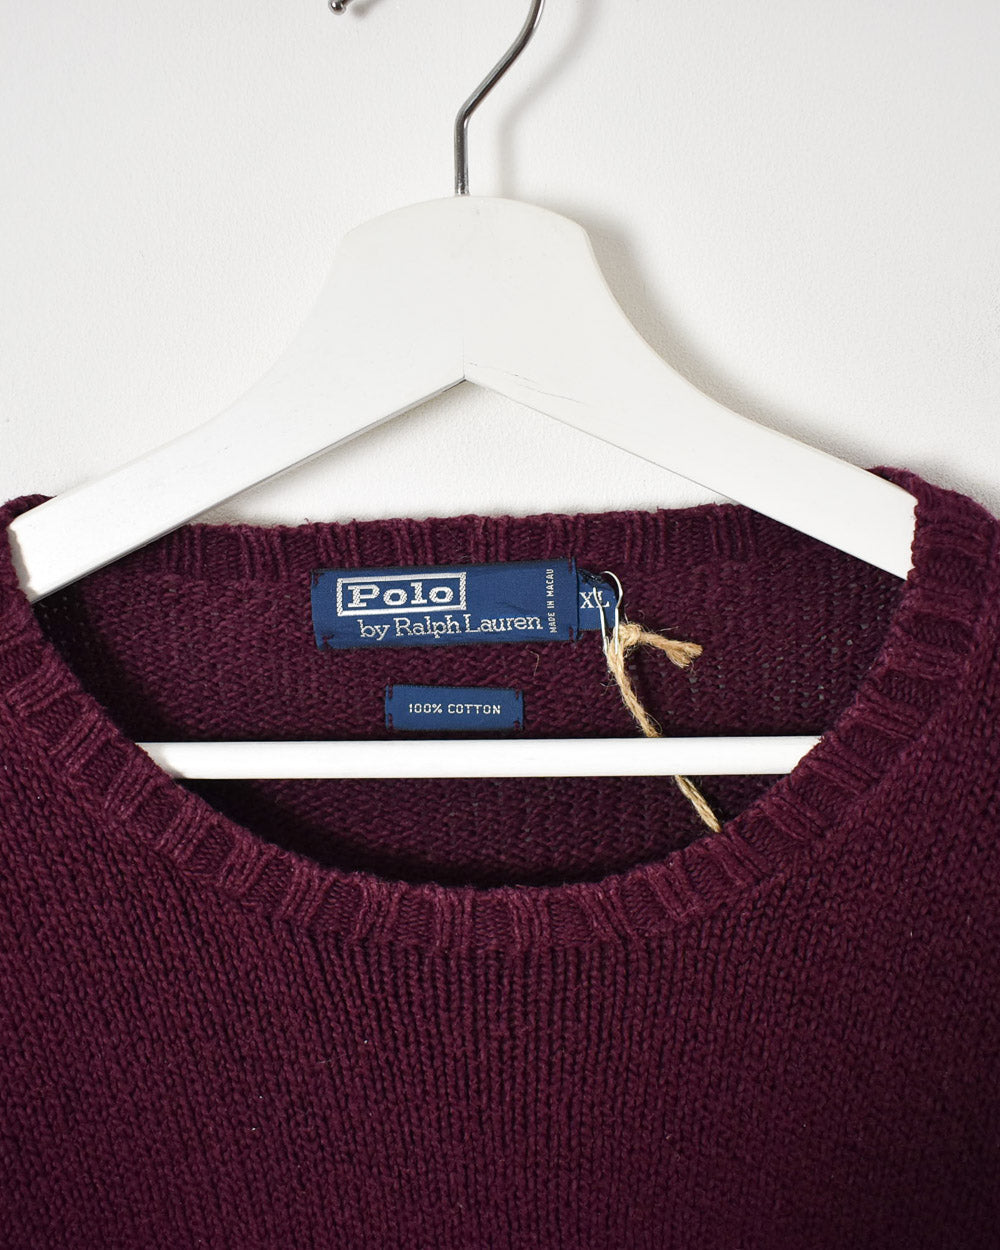 Maroon Ralph Lauren Knitted Sweatshirt - Medium